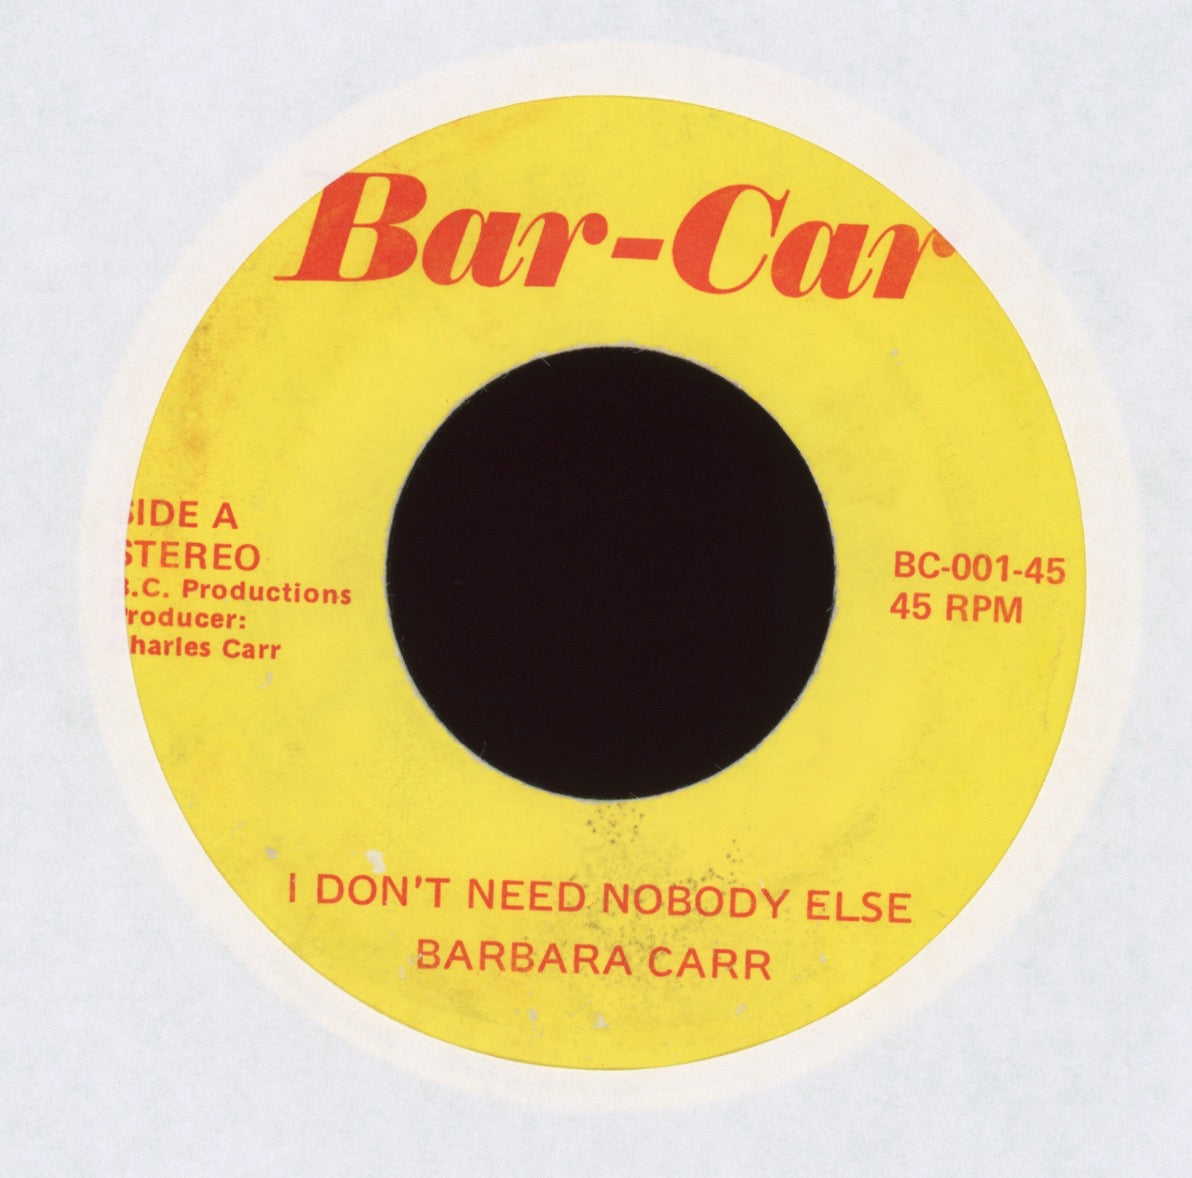 Barbara Carr - I Don't Need Nobody Else on Bar-Car